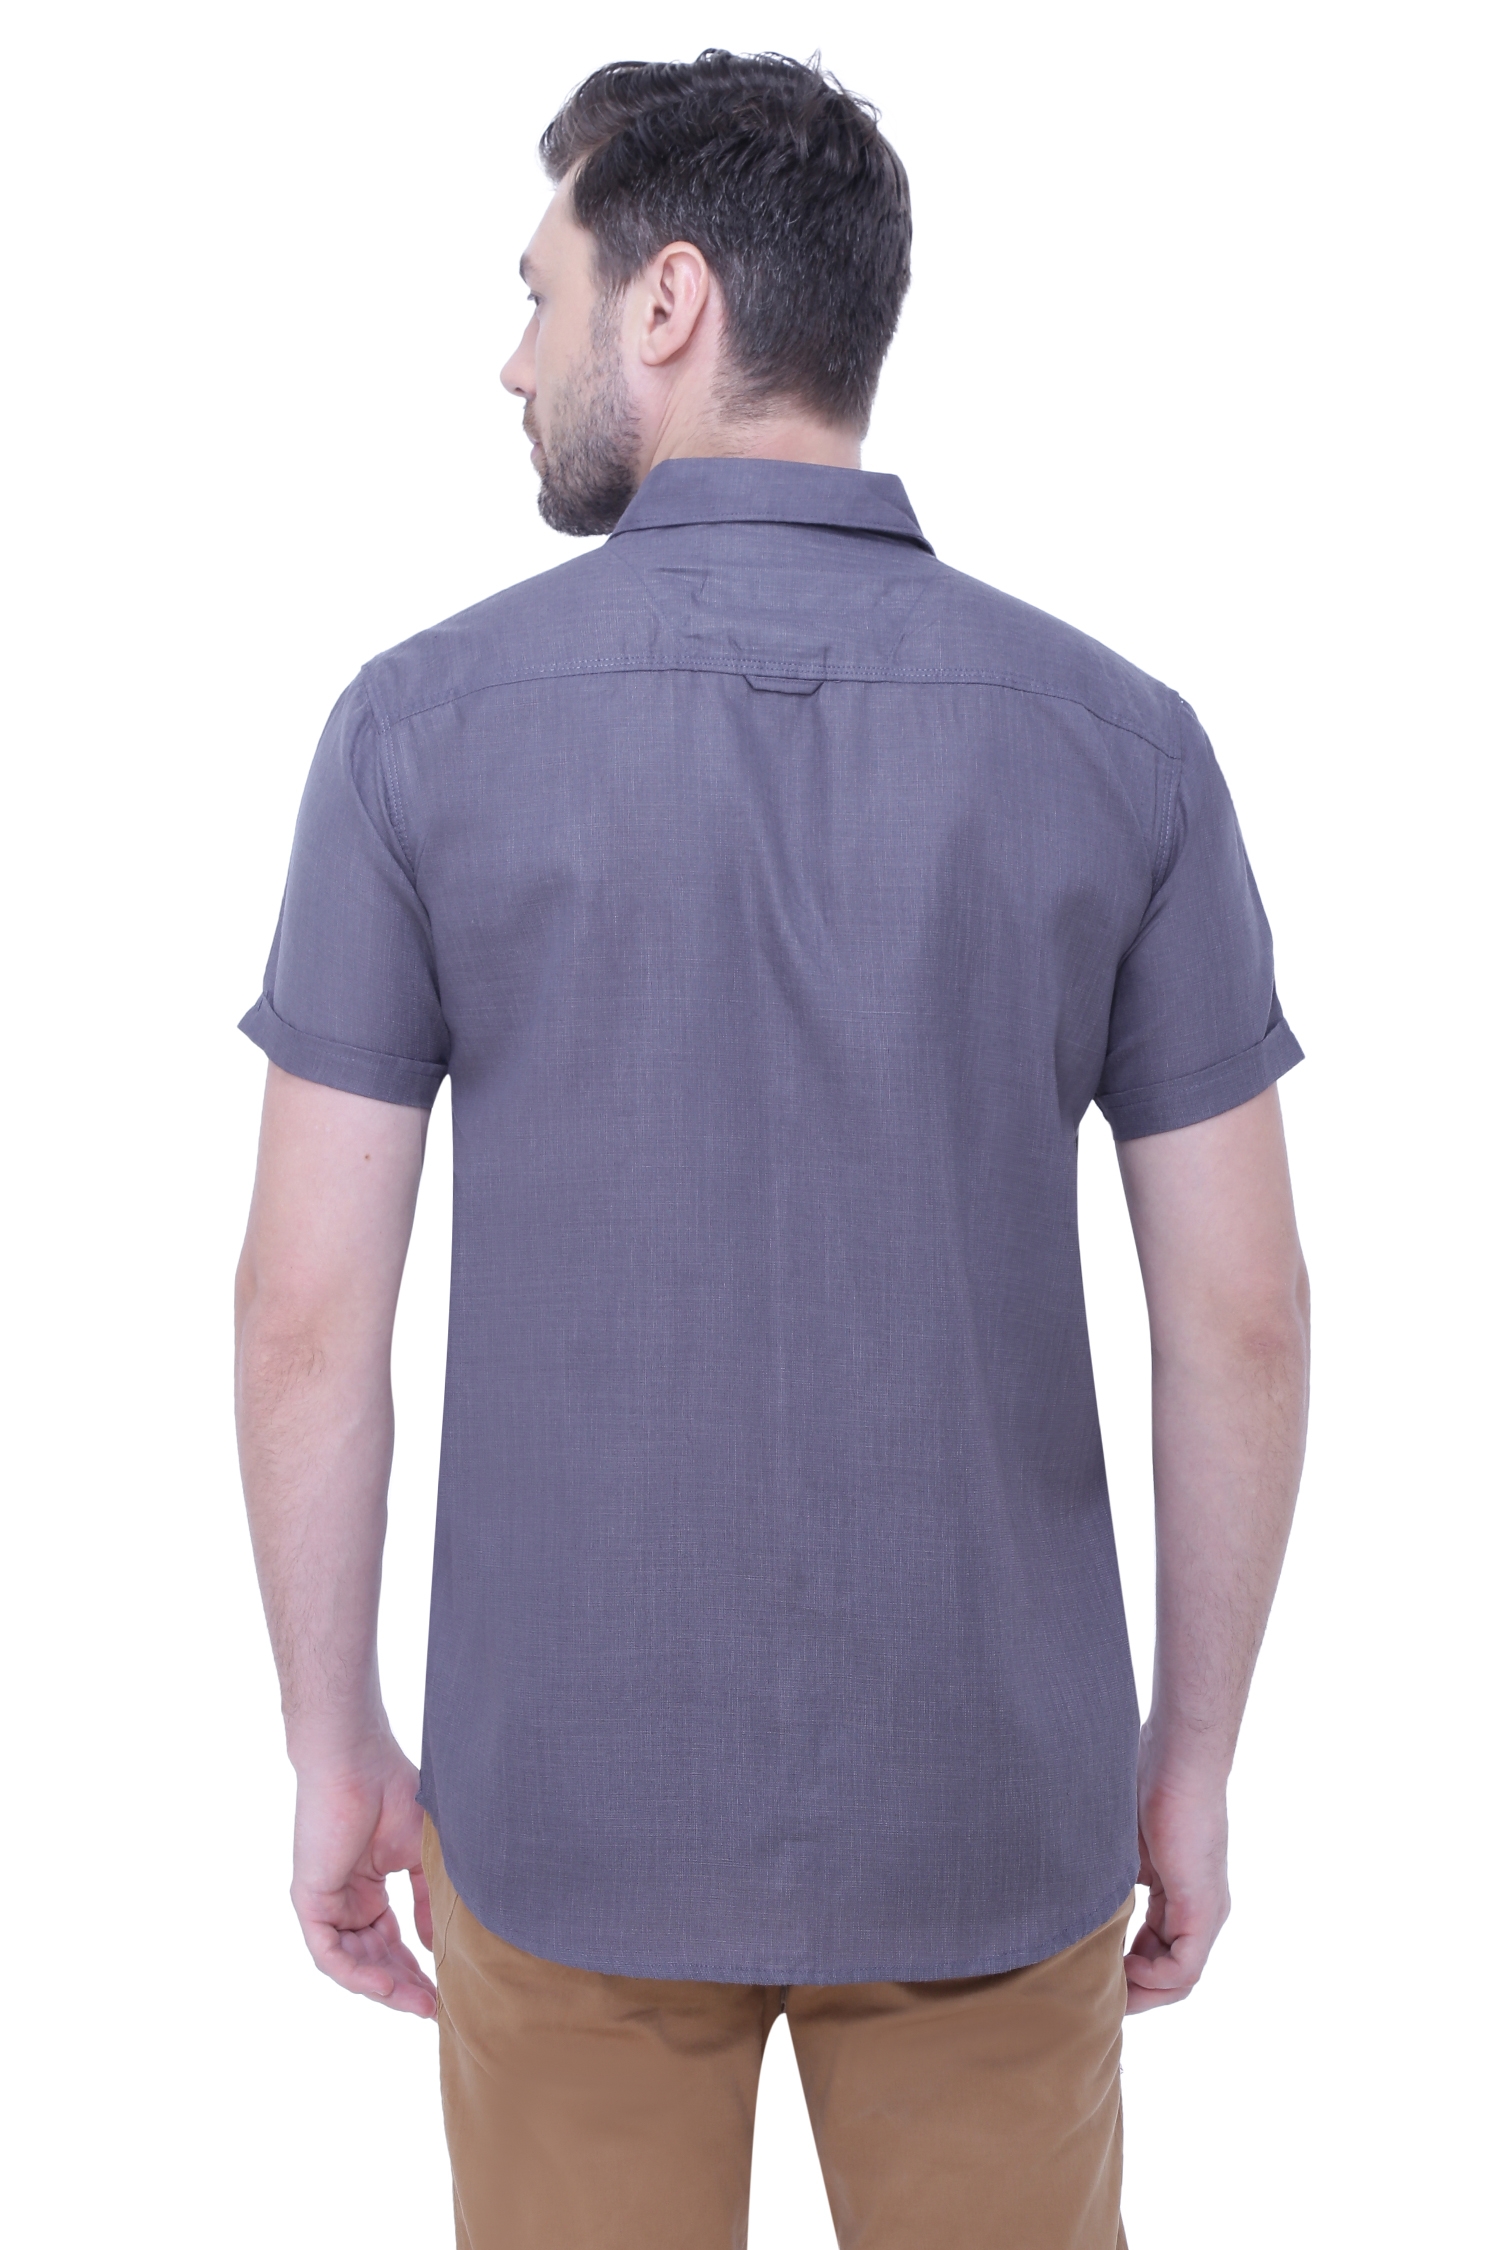 Kuons Avenue | Kuons Avenue Men's Linen Blend Half Sleeves Casual Shirt-KACLHS1221 2